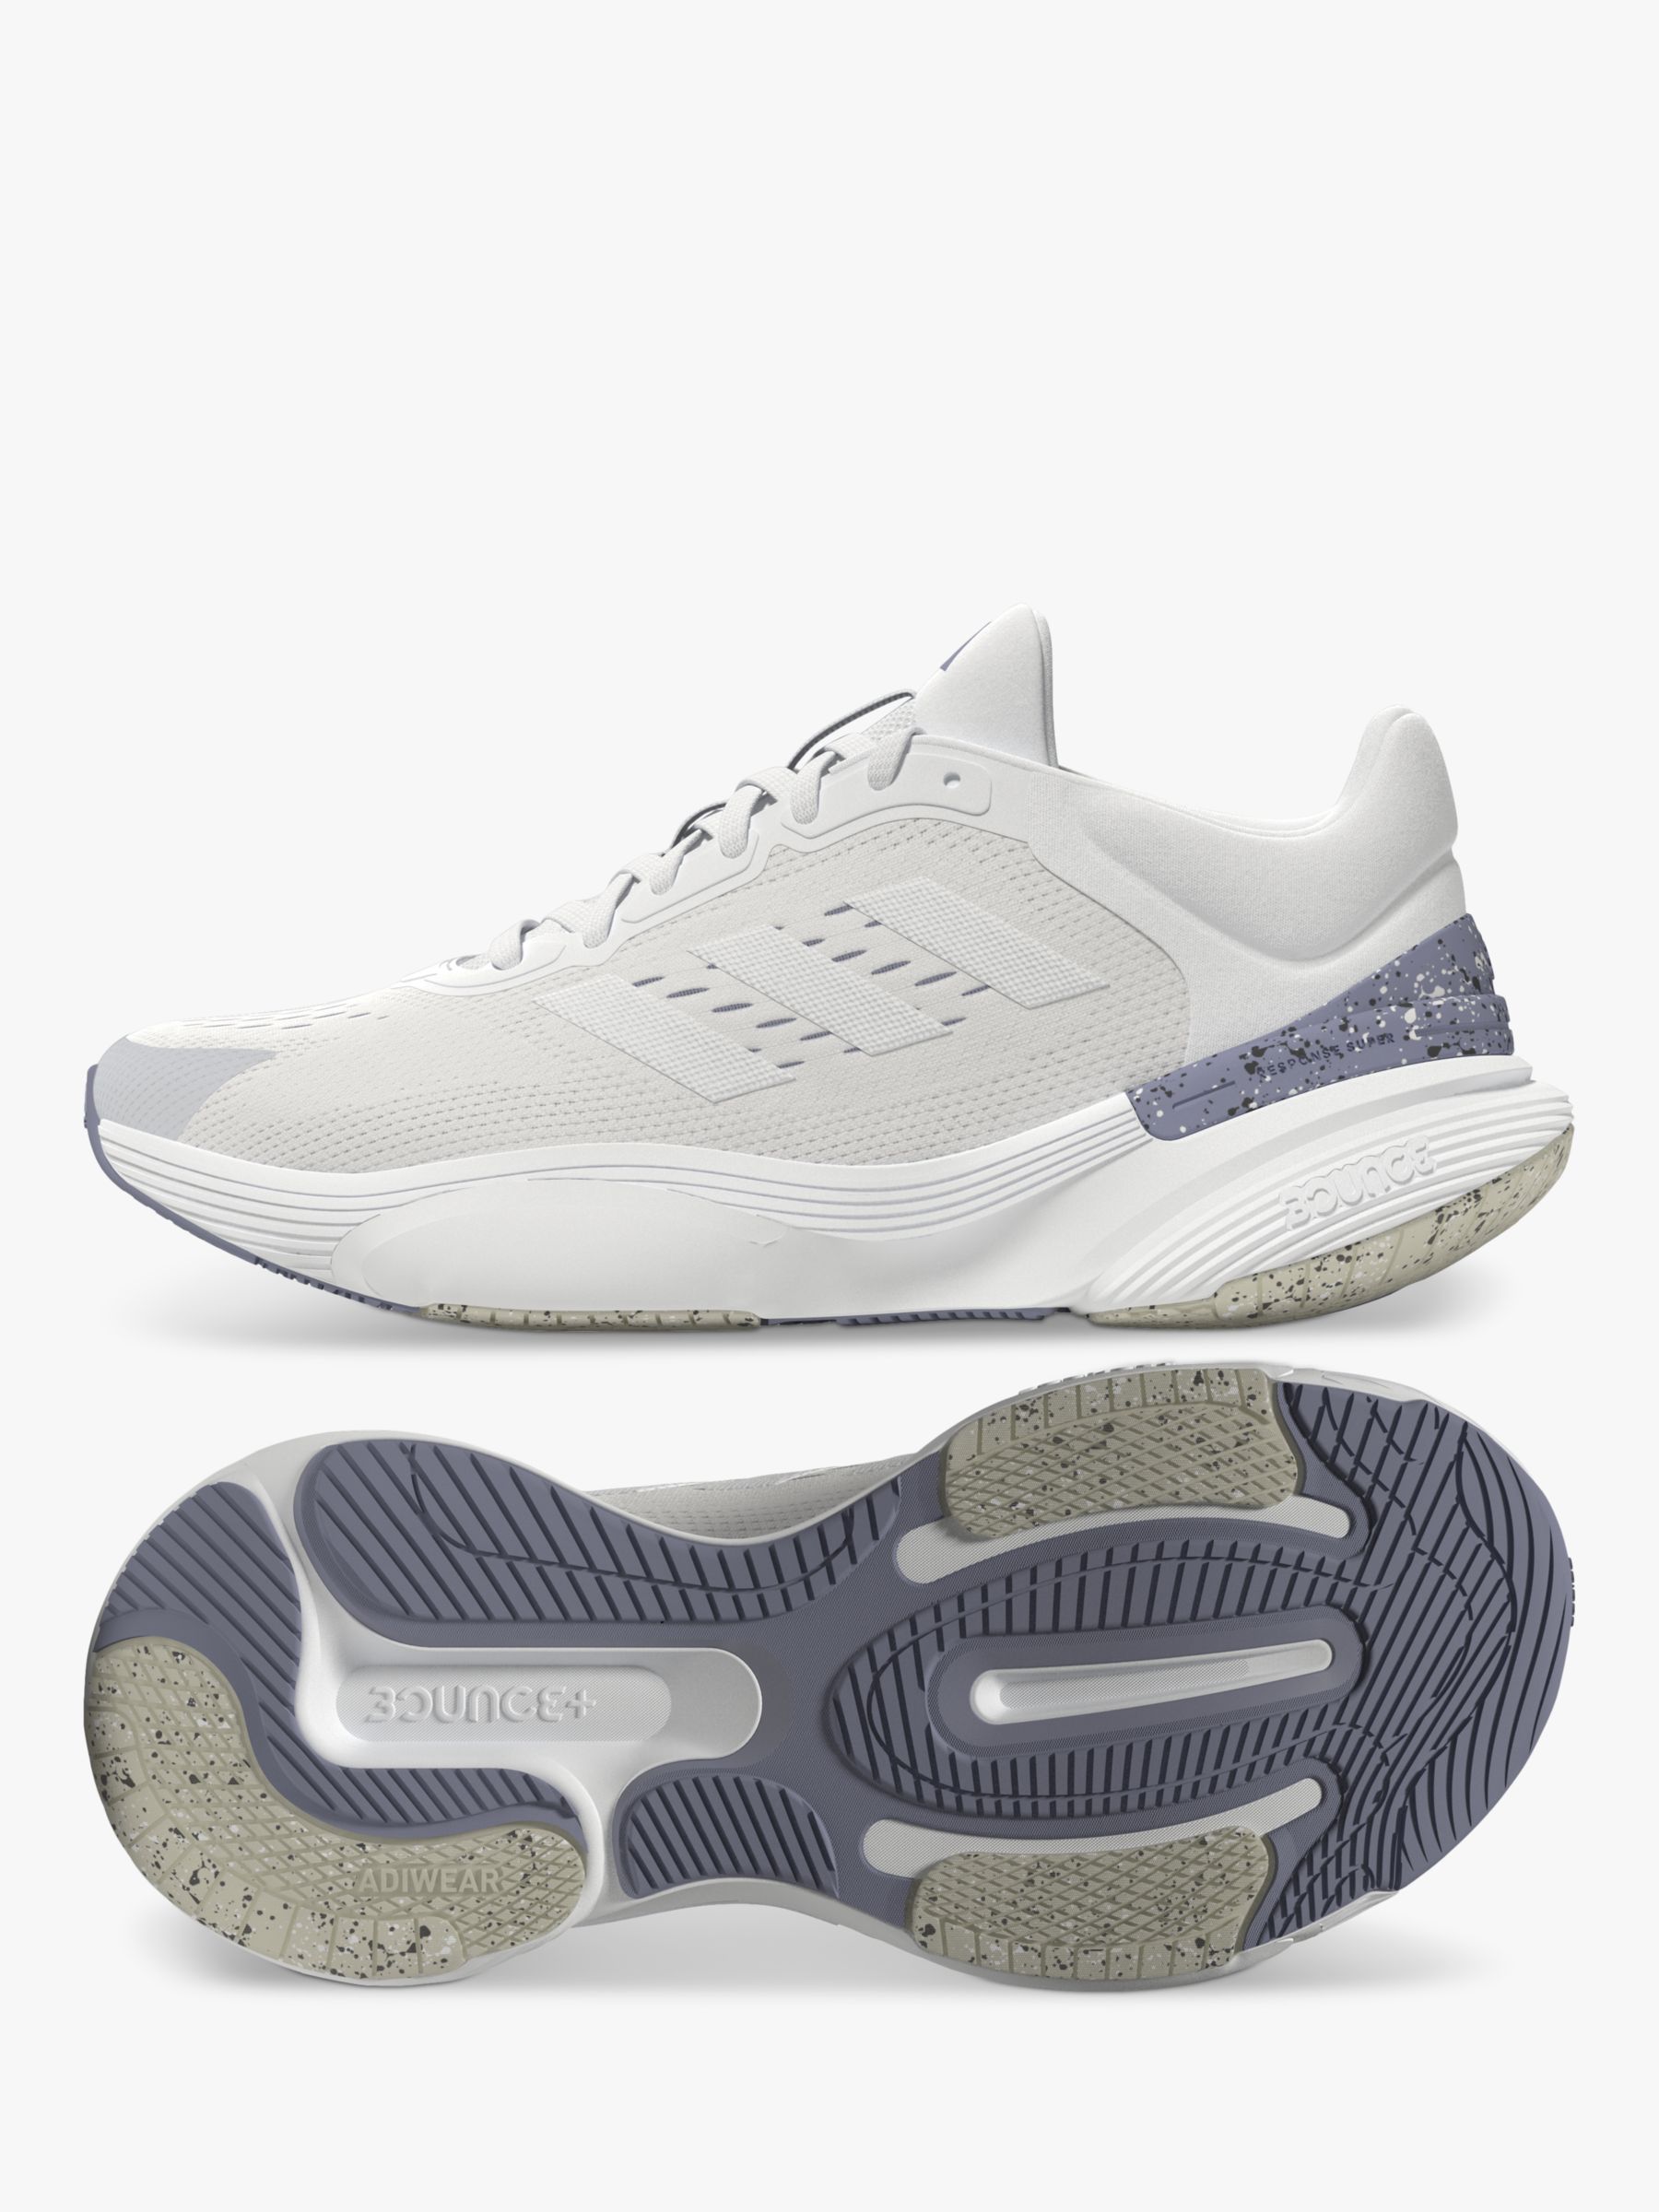 adidas Response Super 3.0 Women's Running Shoes, White/Cloud White/Silver John Lewis & Partners